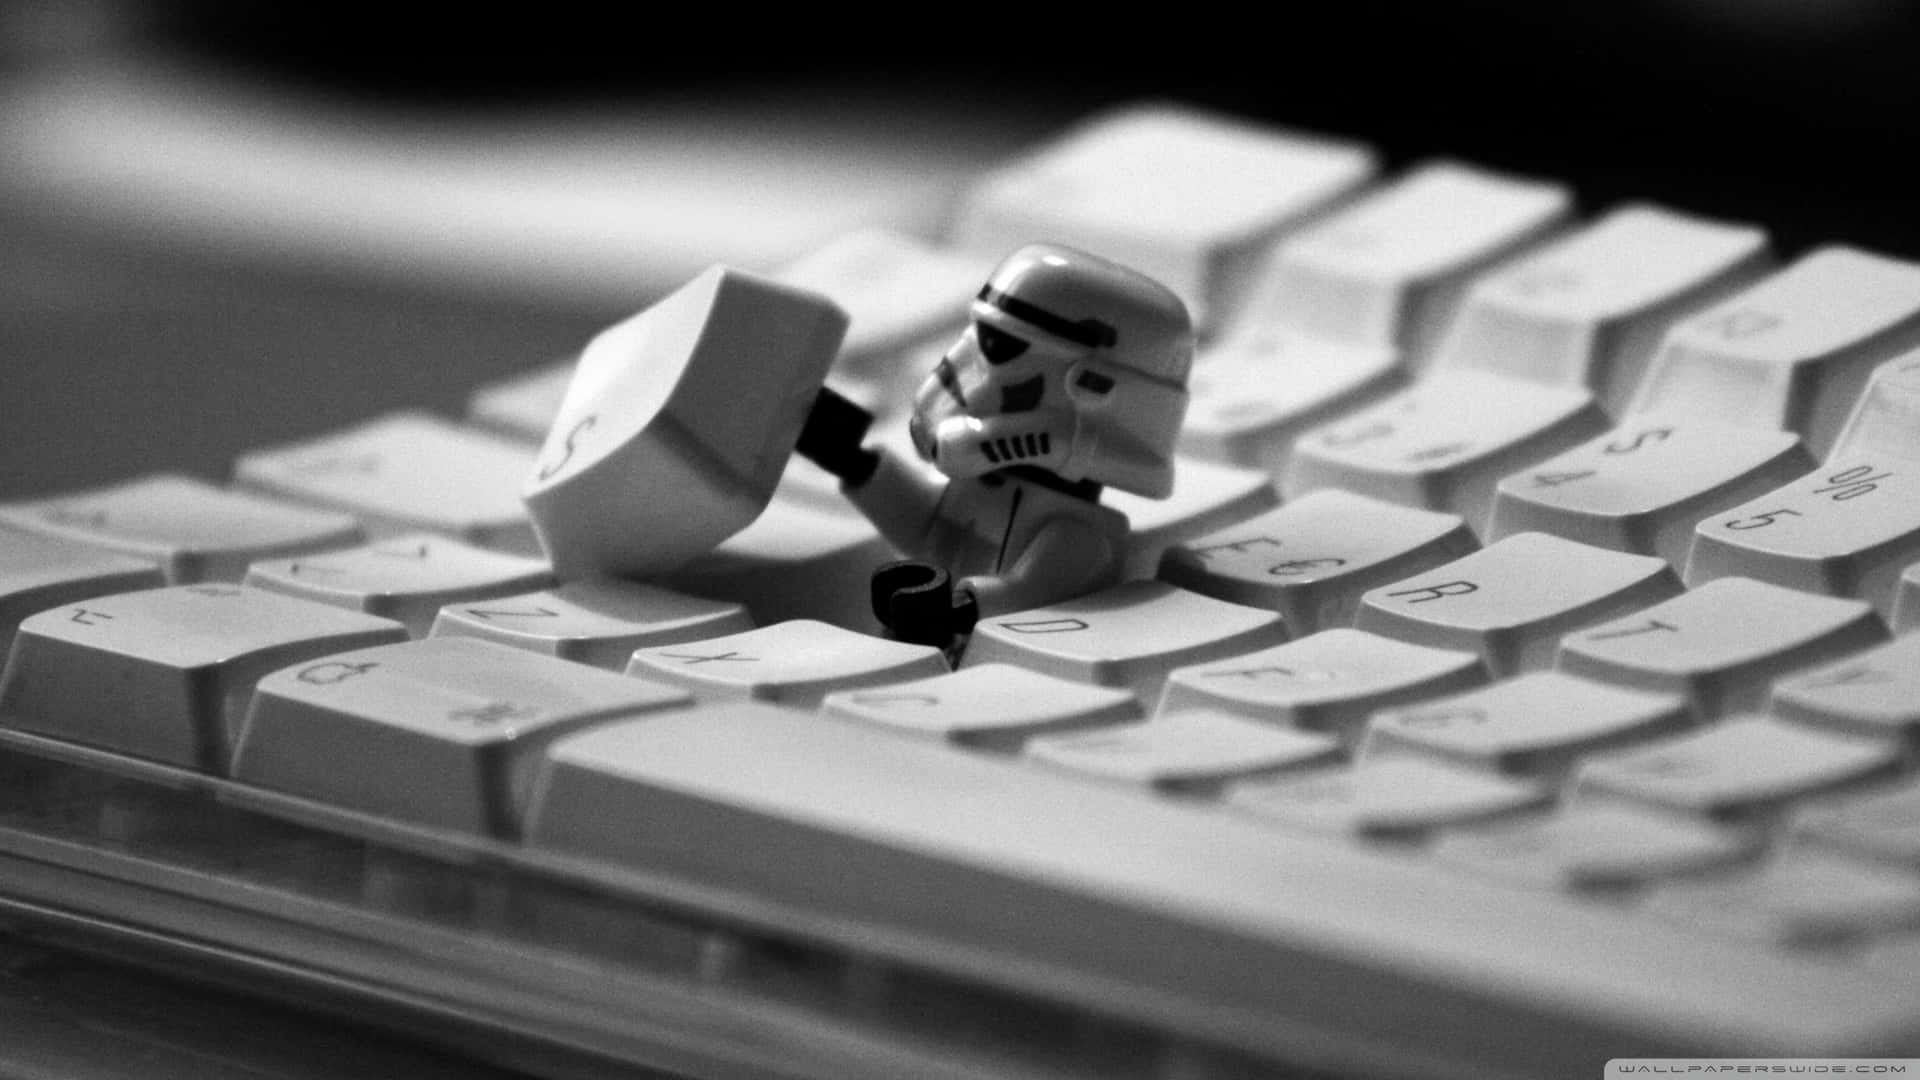 Lego Imperial Stormtrooper On A Keyboard Wallpaper